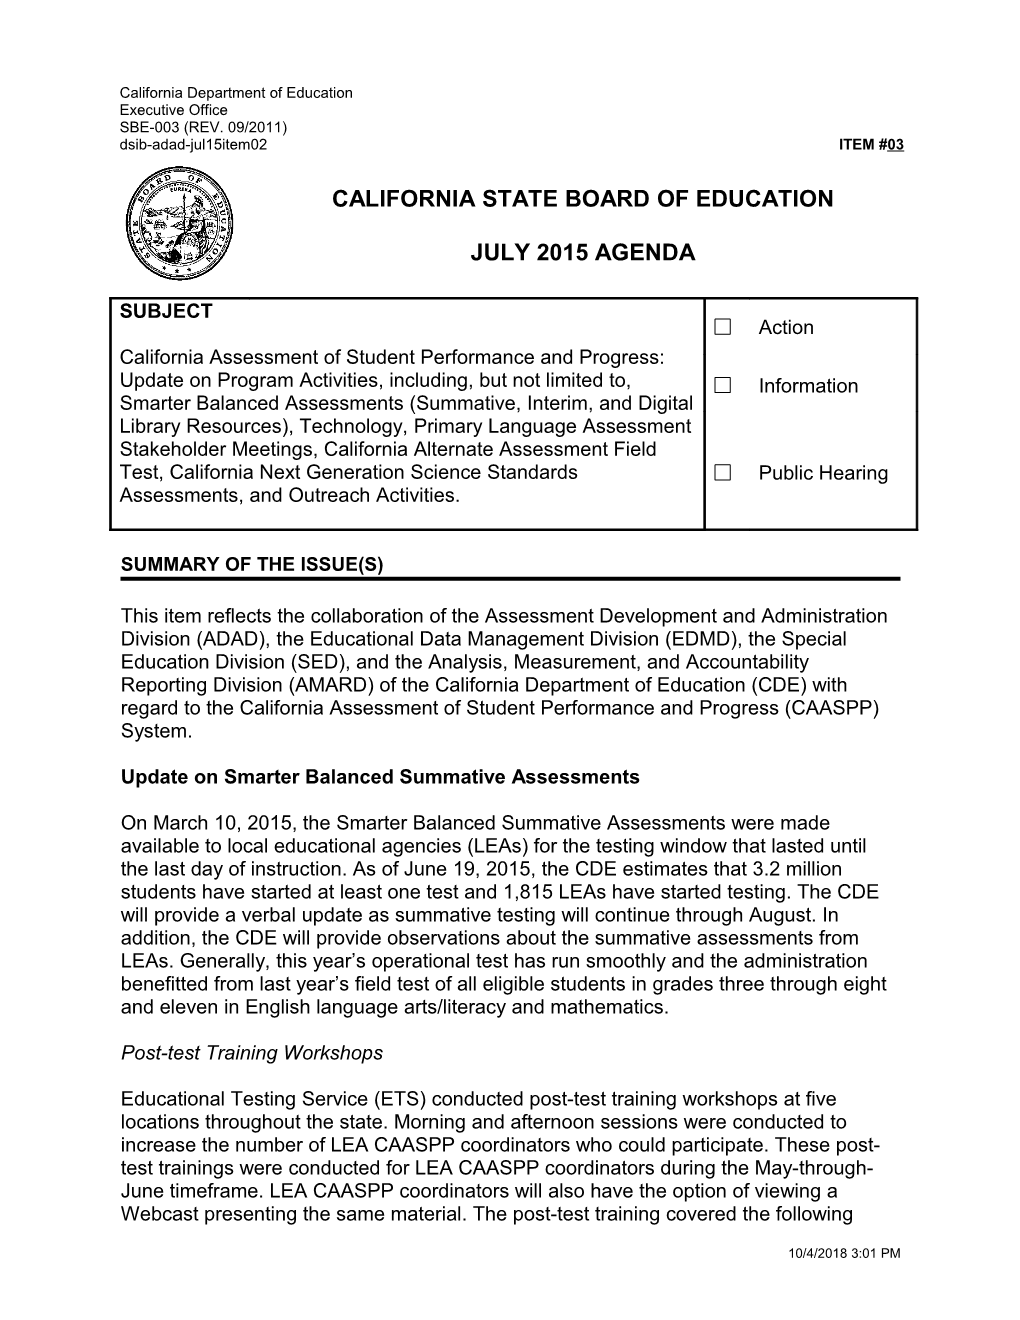 July 2015 Agenda Item 03 - Meeting Agendas (CA State Board of Education)